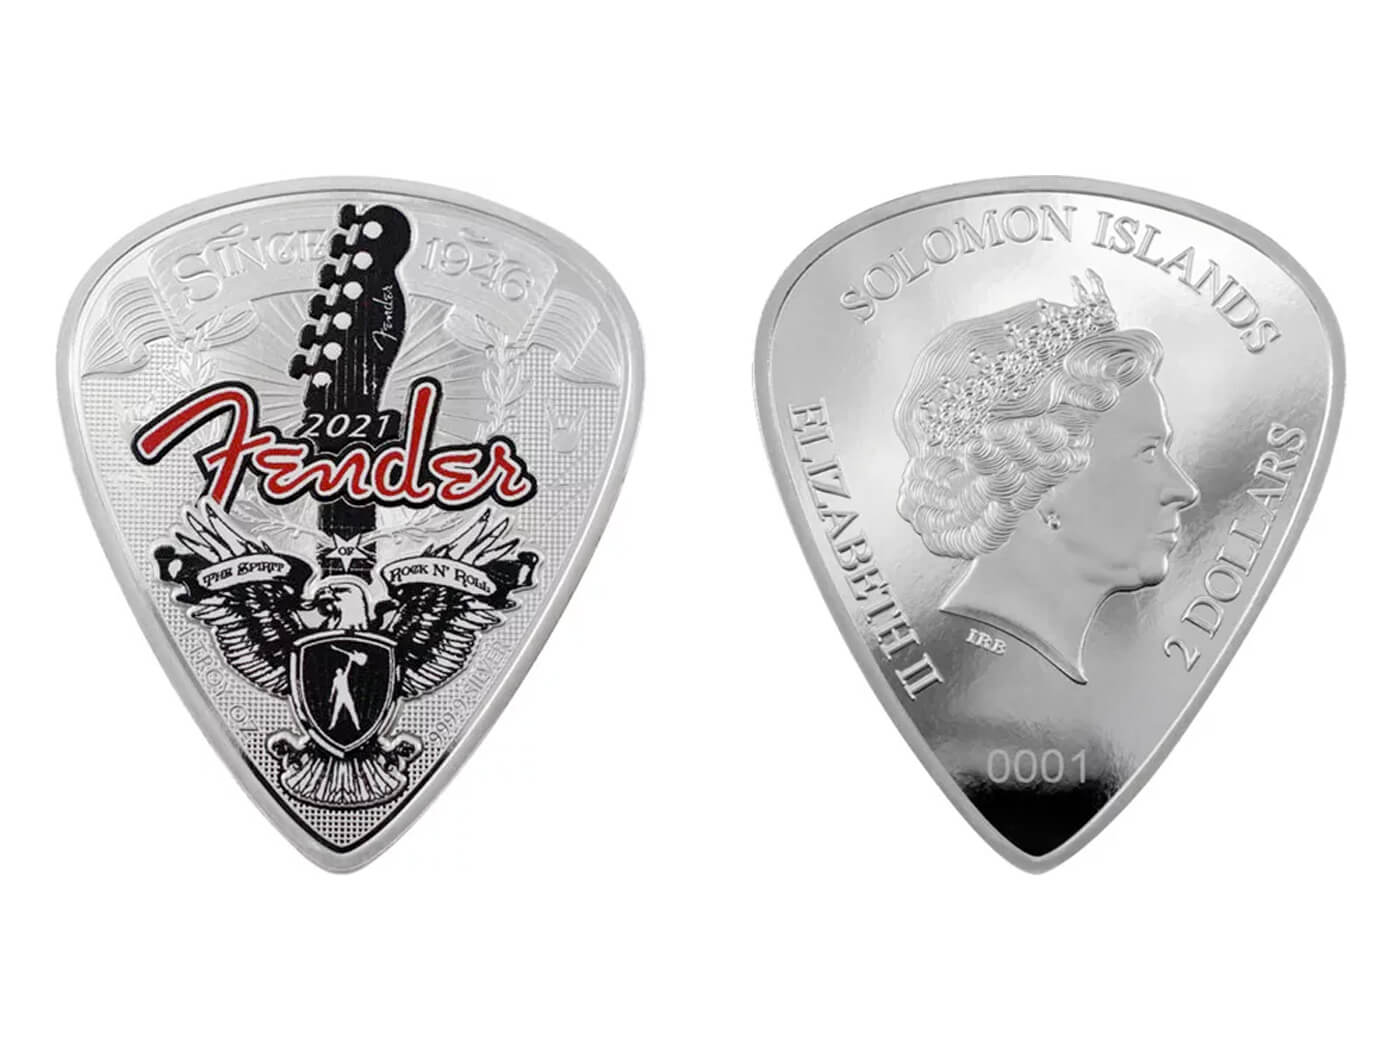 Fender x PAMP coins